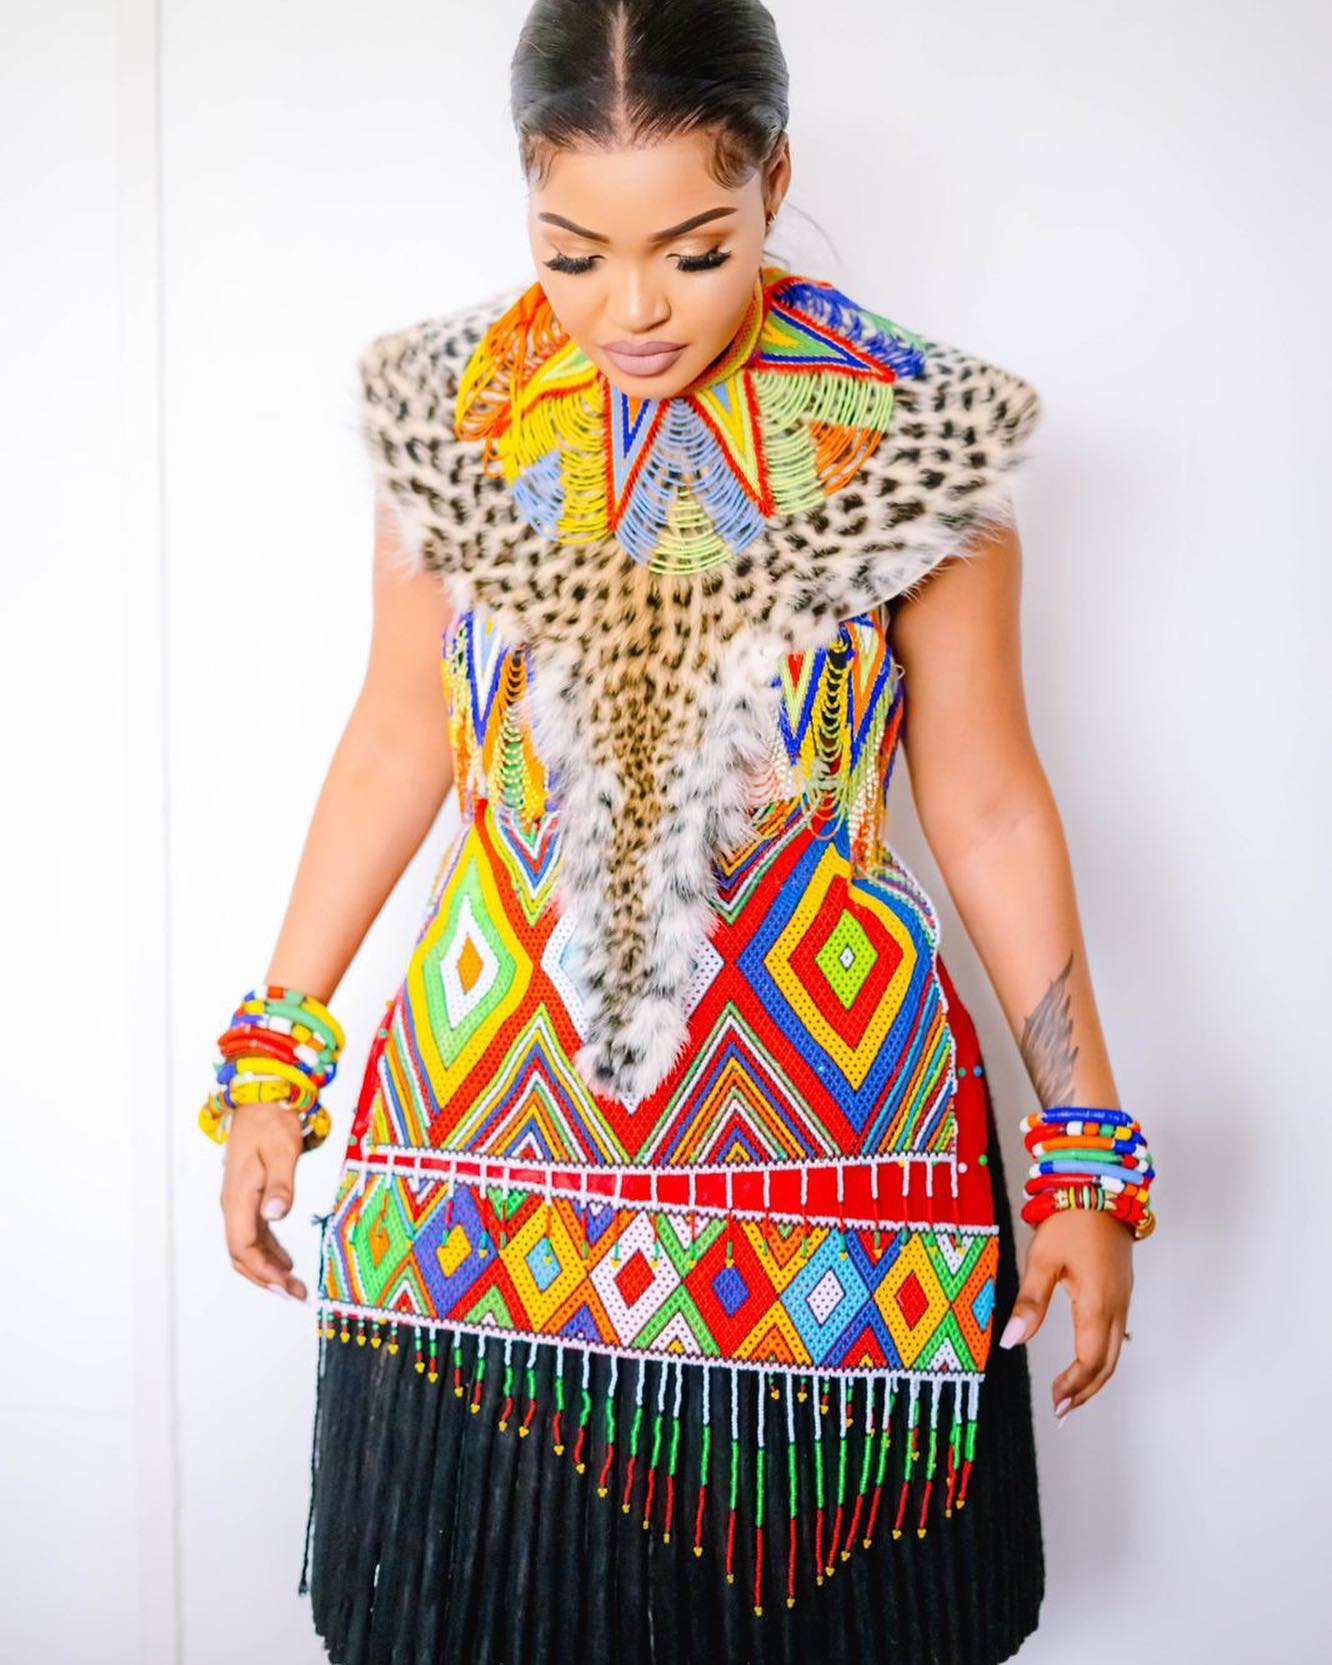 Zulu traditional attire for black women -traditional attire 15